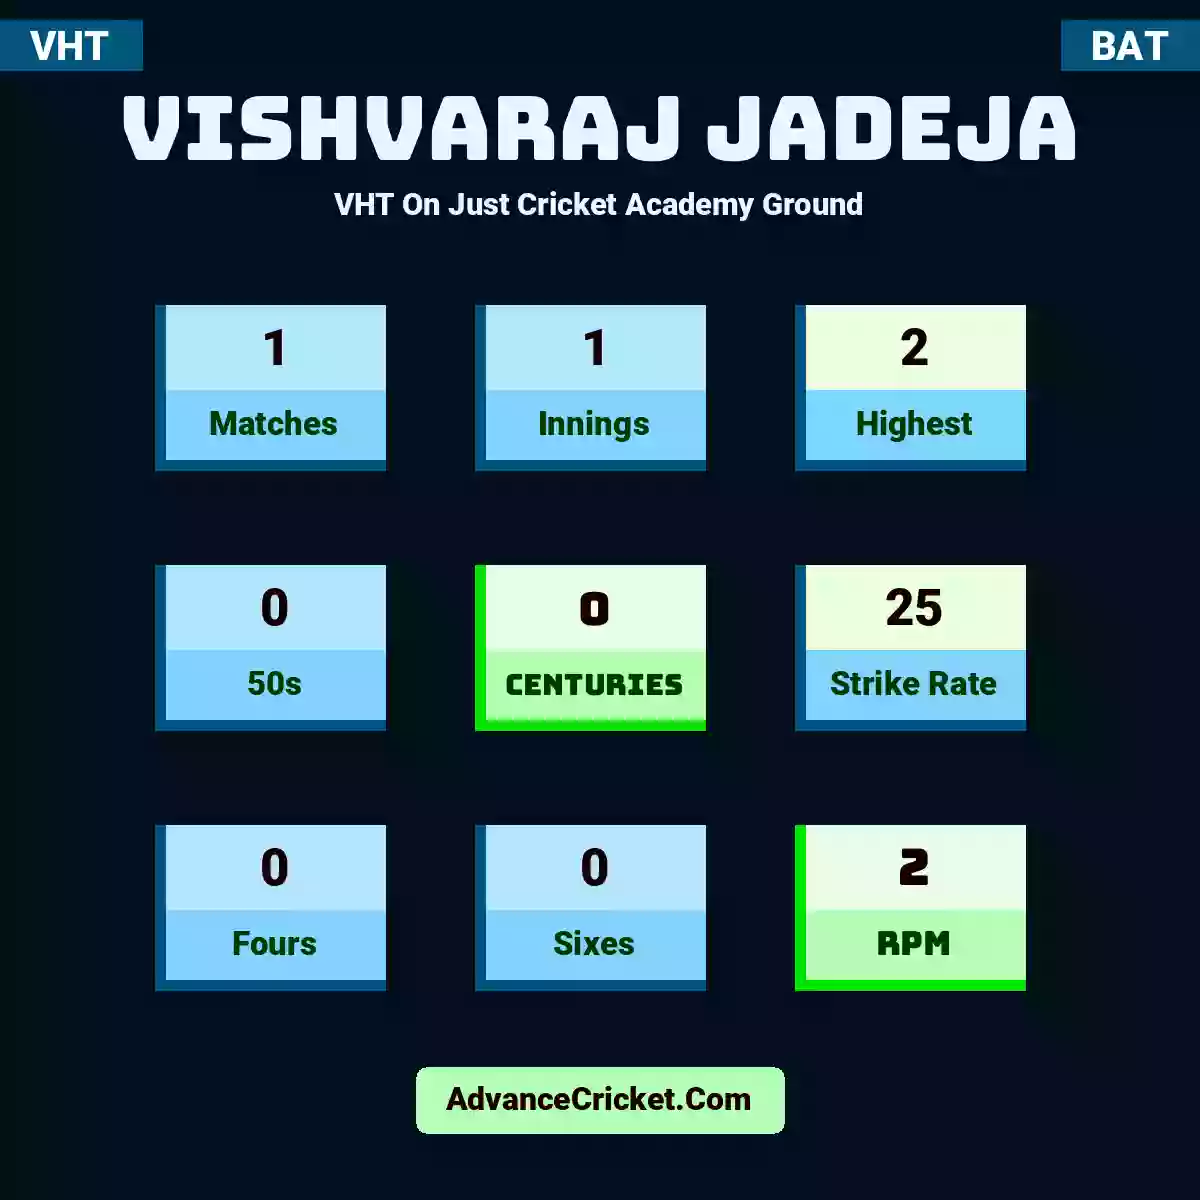 Vishvaraj Jadeja VHT  On Just Cricket Academy Ground, Vishvaraj Jadeja played 1 matches, scored 2 runs as highest, 0 half-centuries, and 0 centuries, with a strike rate of 25. V.Jadeja hit 0 fours and 0 sixes, with an RPM of 2.